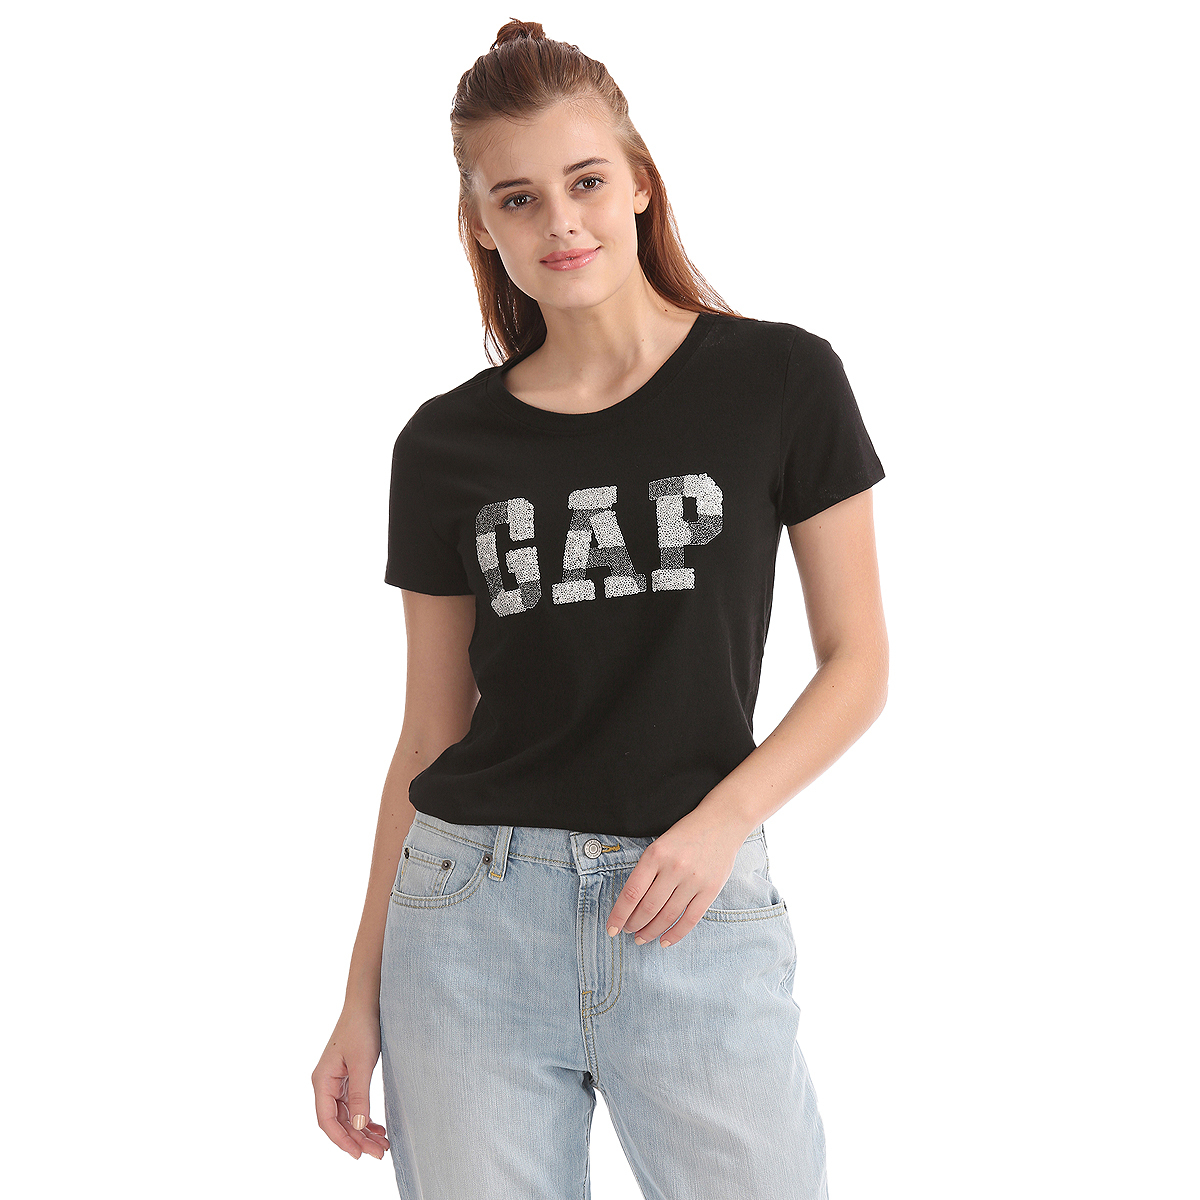 Gap Solid Color Regular Fit Round Neck T-Shirt Styled with Sequins Embellished Logo - Black